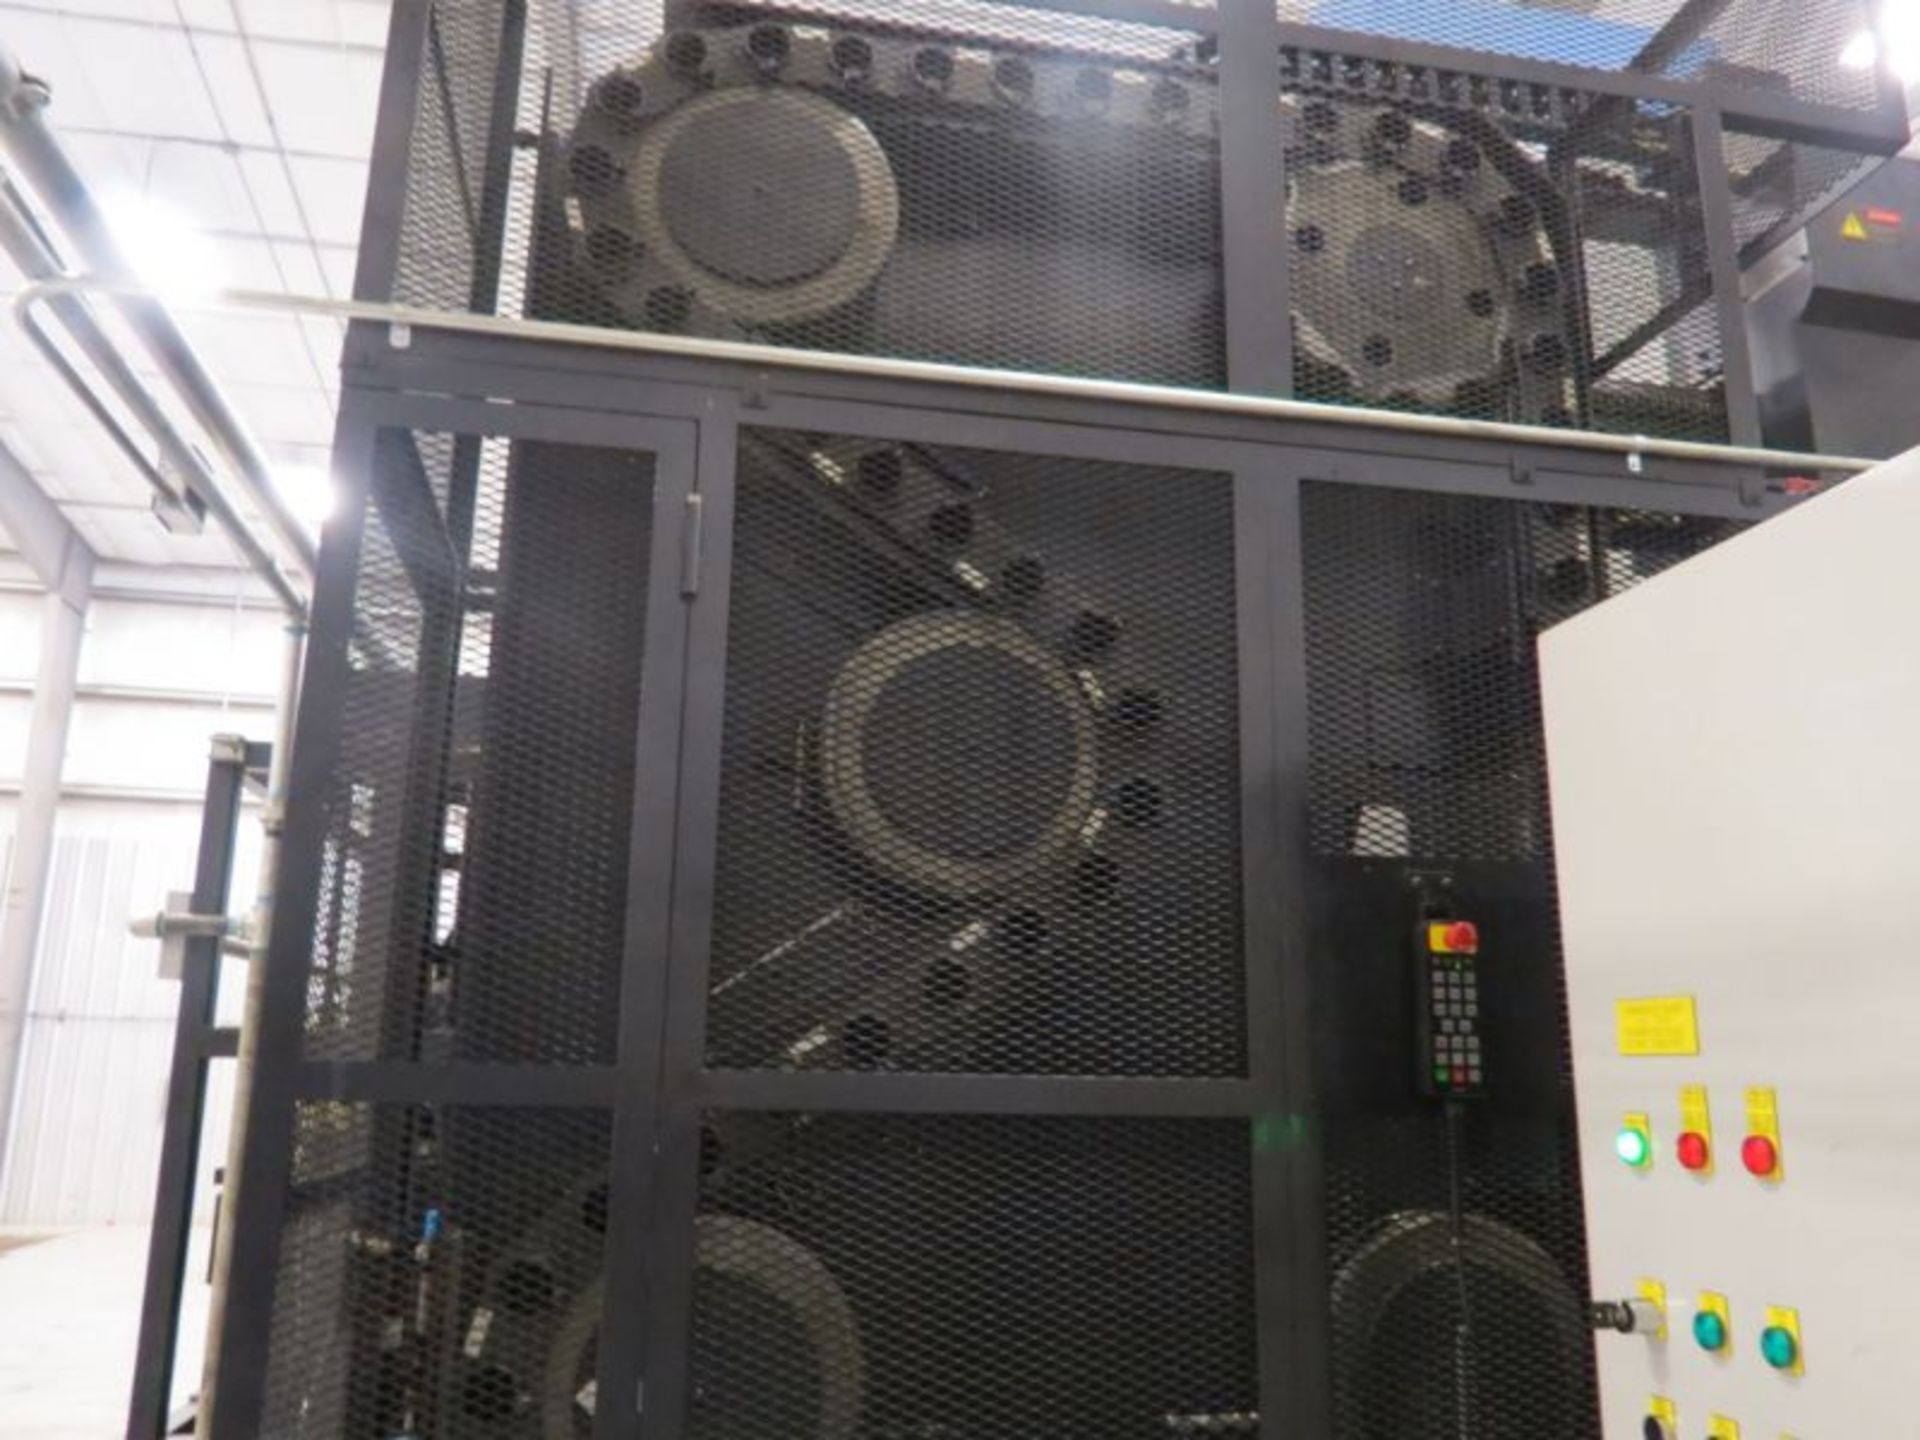 5"Doosan DBC130 CNC Horizontal Boring & Milling Machine, Fanuc 31-iA Ctrl *Located in Broussard, LA* - Image 22 of 27